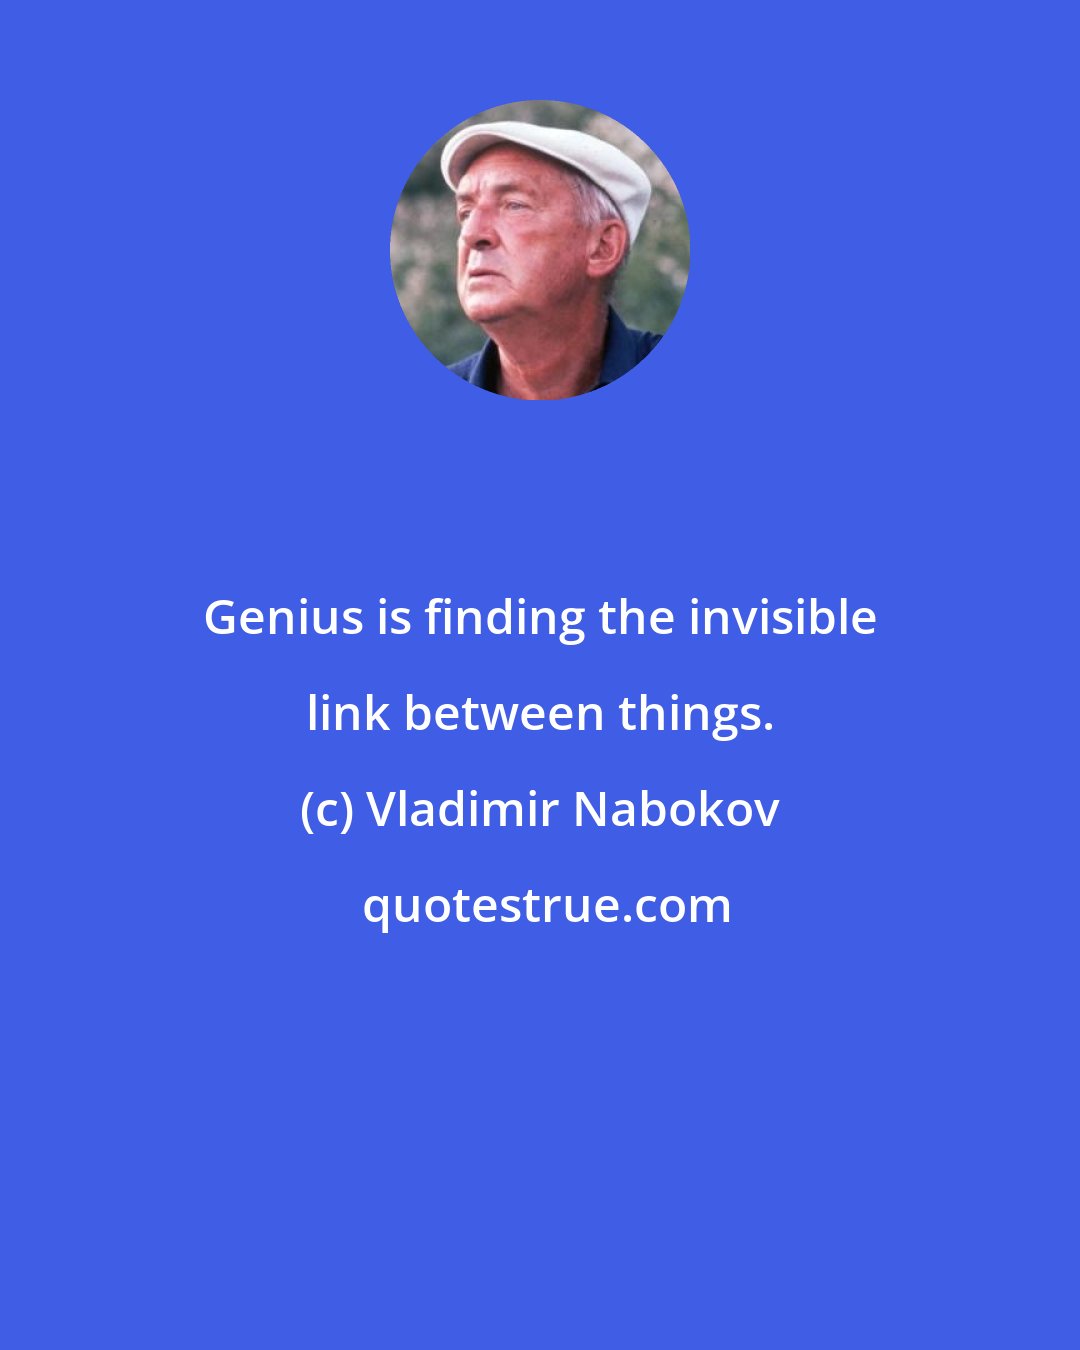 Vladimir Nabokov: Genius is finding the invisible link between things.